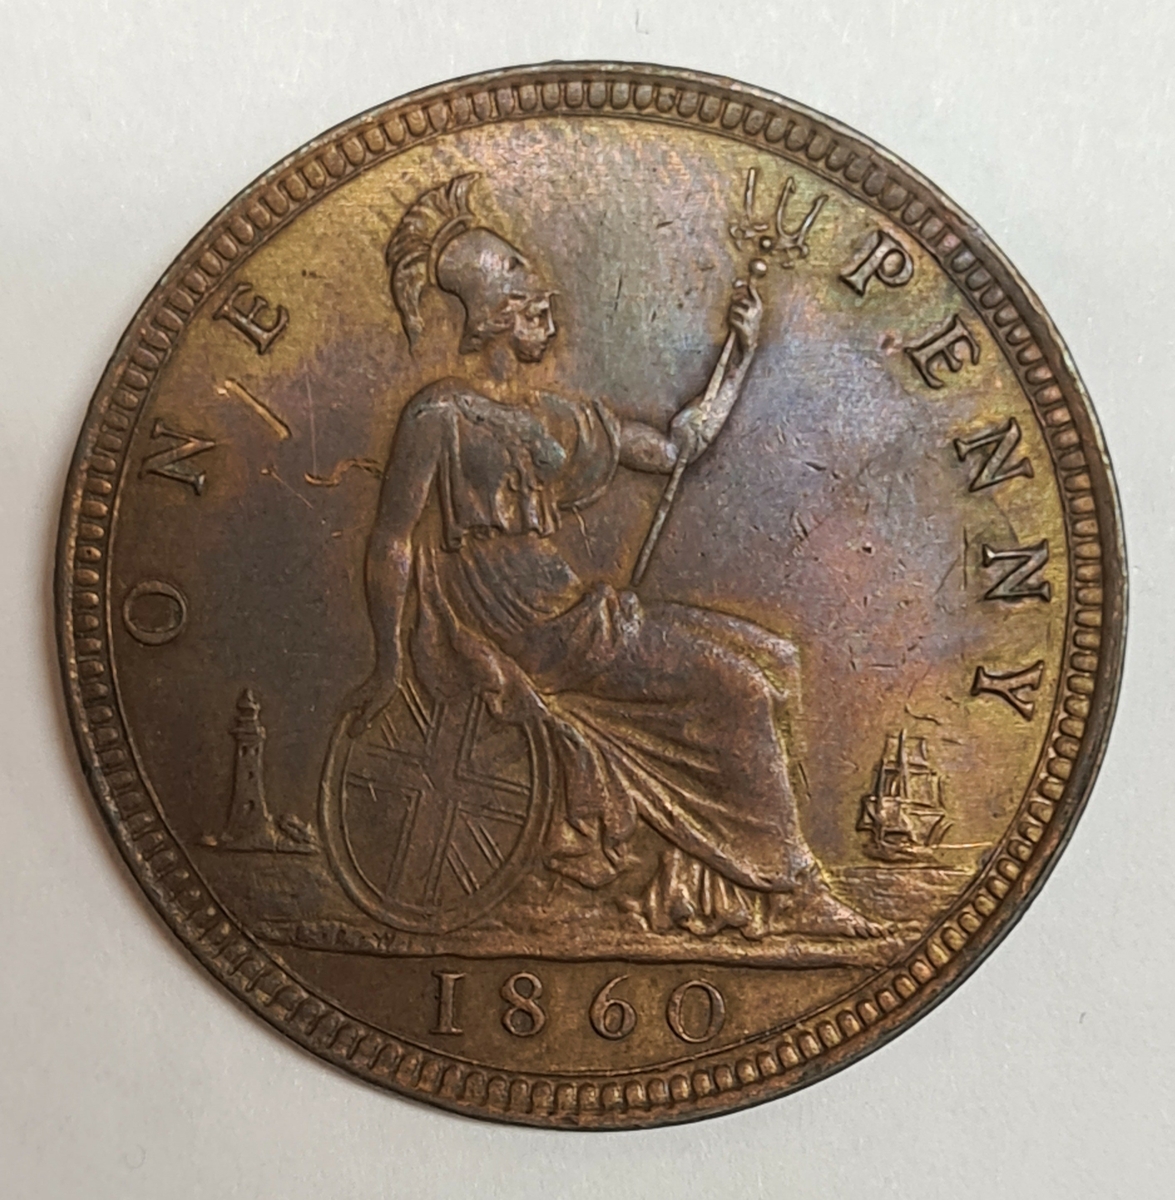 3 mynt från Storbritanien.
1 Penny, 1860
1 Penny, 1863
1 Penny, 1866